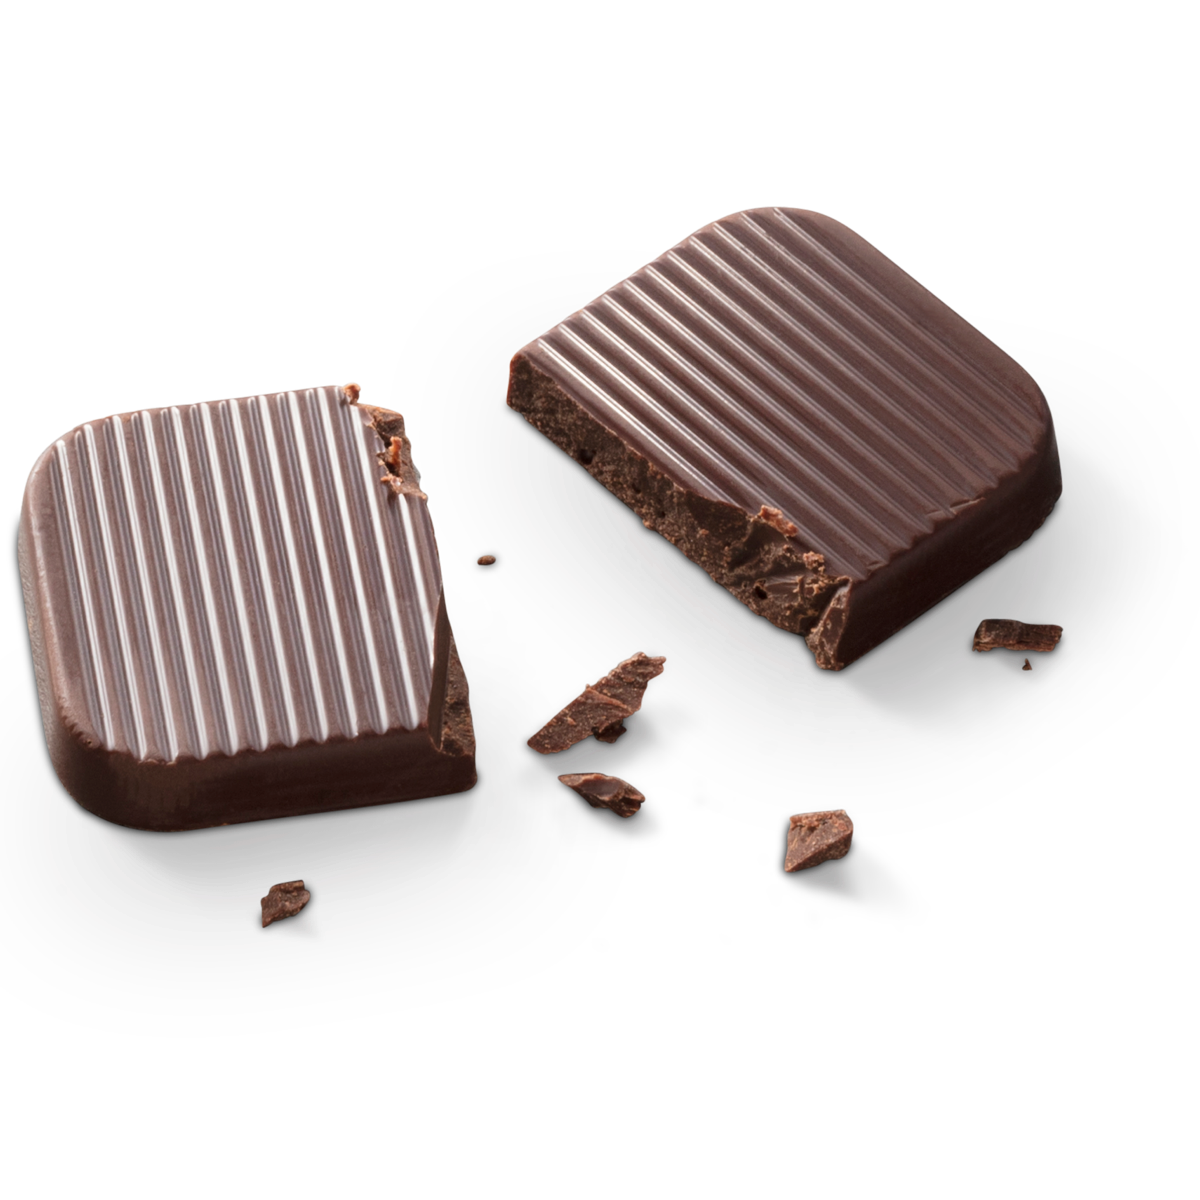 NEW TRIAL SIZE! Bouchard Probiotic Dark Belgian Chocolate (72% Cacao)